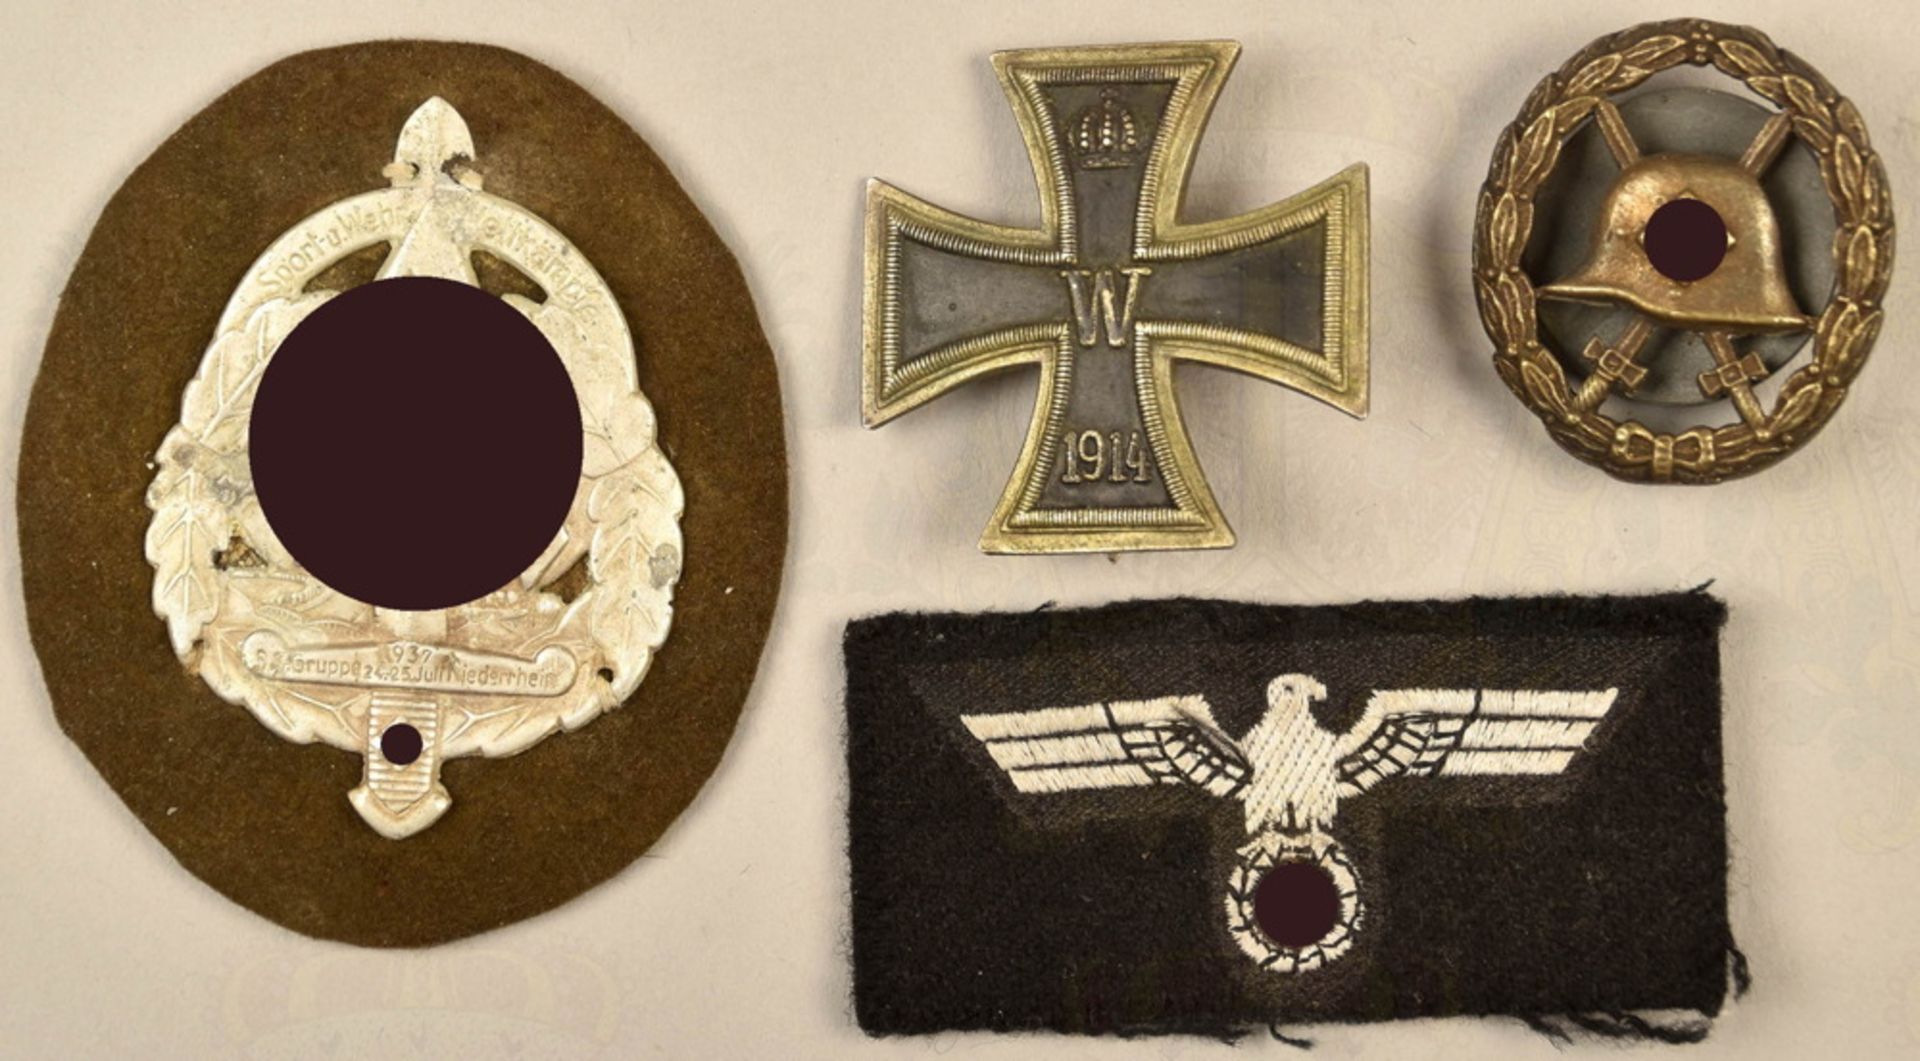 2 German military awards and 2 uniform badges